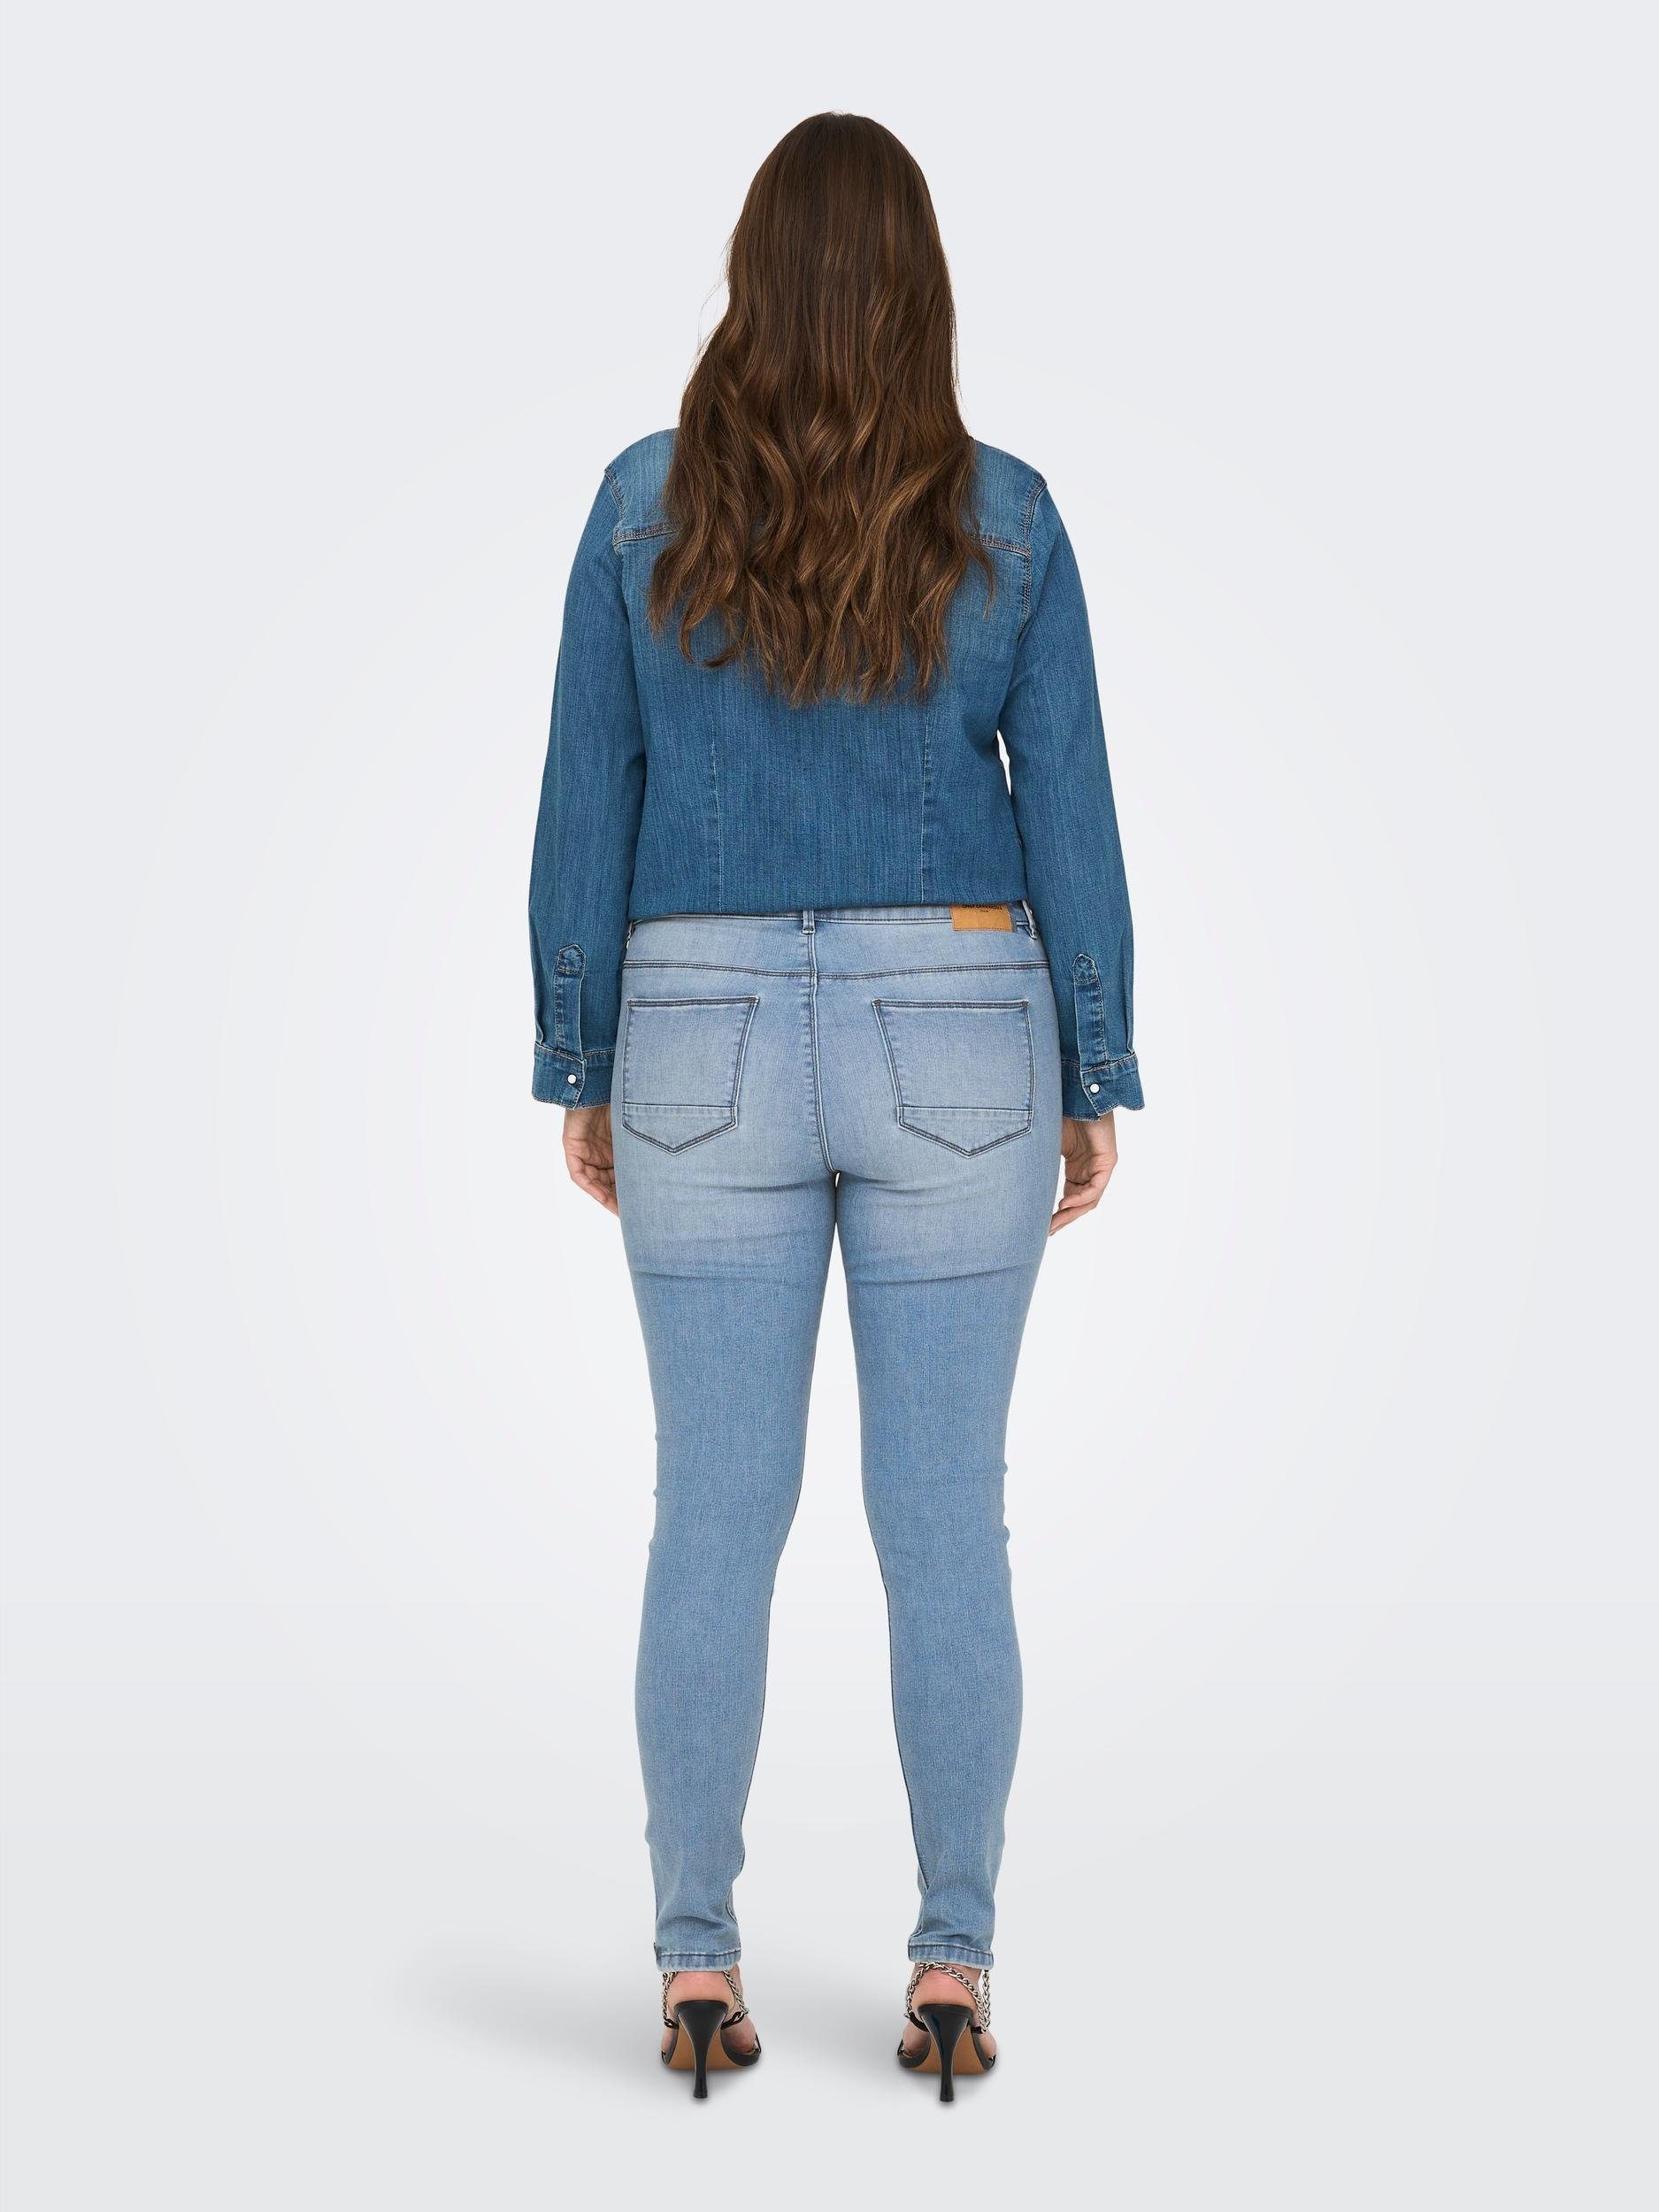 REG Skinny-fit-Jeans Effekt Destroyed BJ759 CARKARLA ONLY CARMAKOMA ANK DNM NOOS SK mit